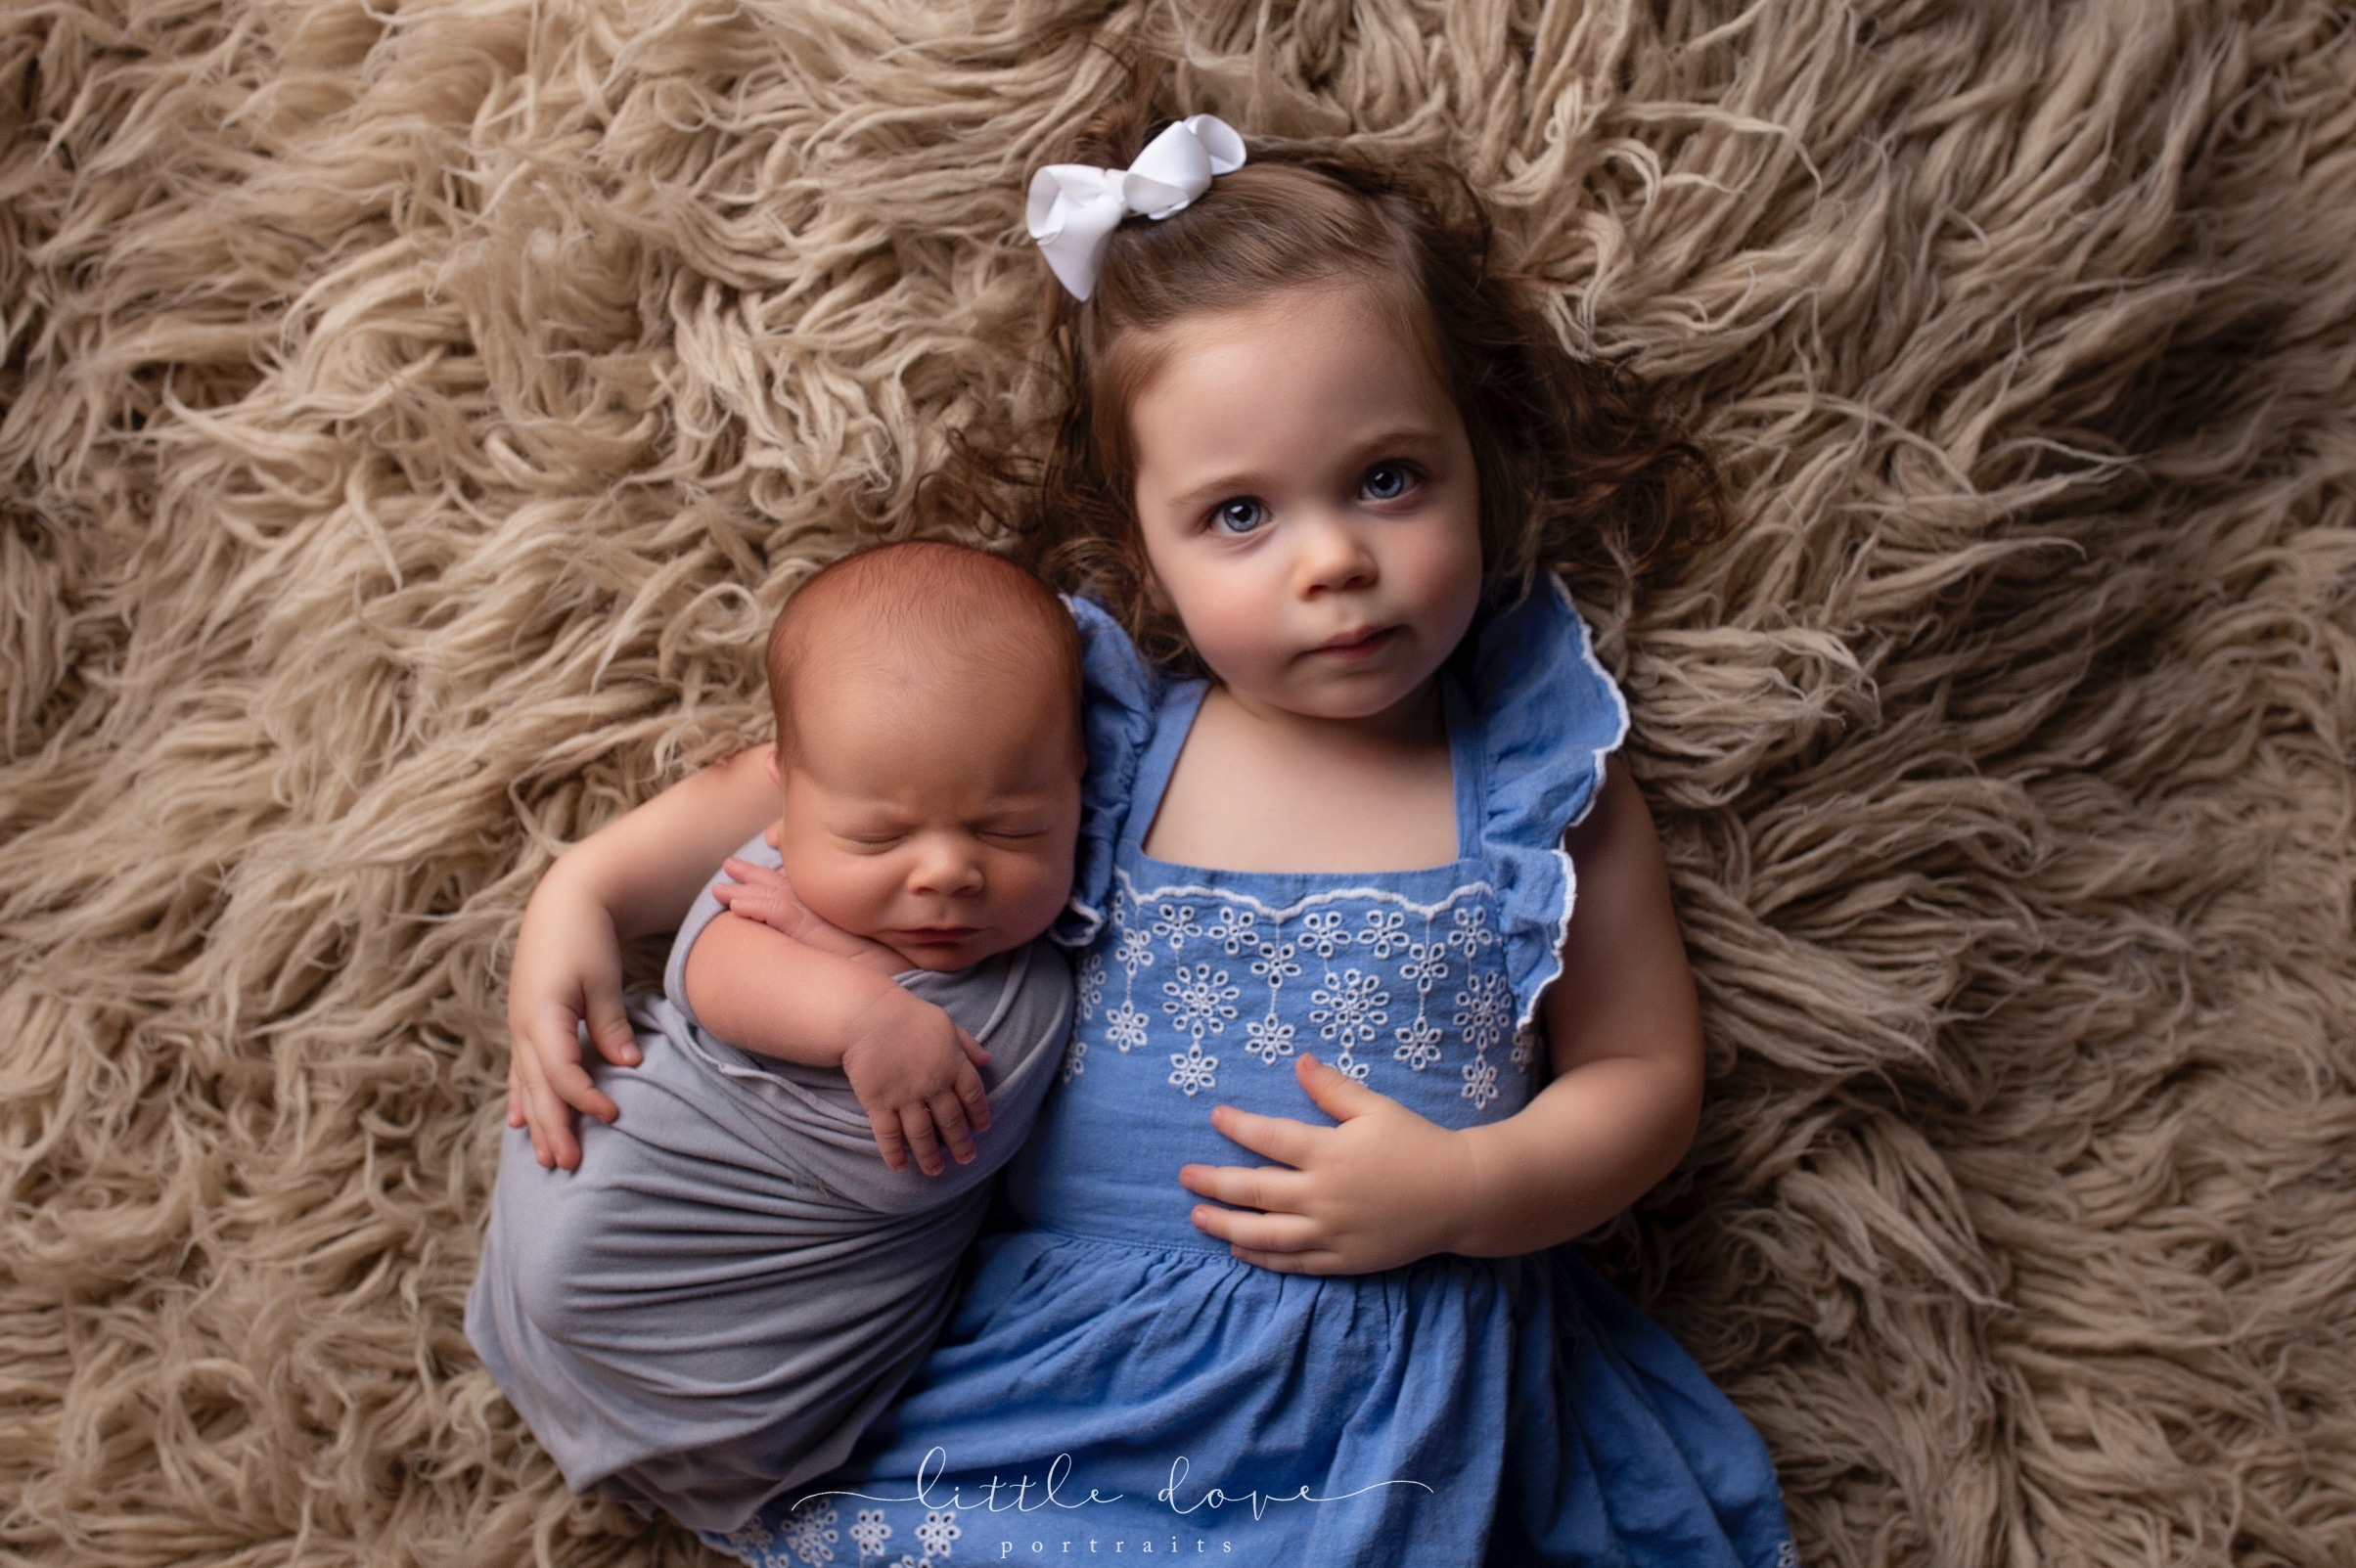 The cutest newborn sibling photos | ©Little Dove Portraits http://ldportraits. net